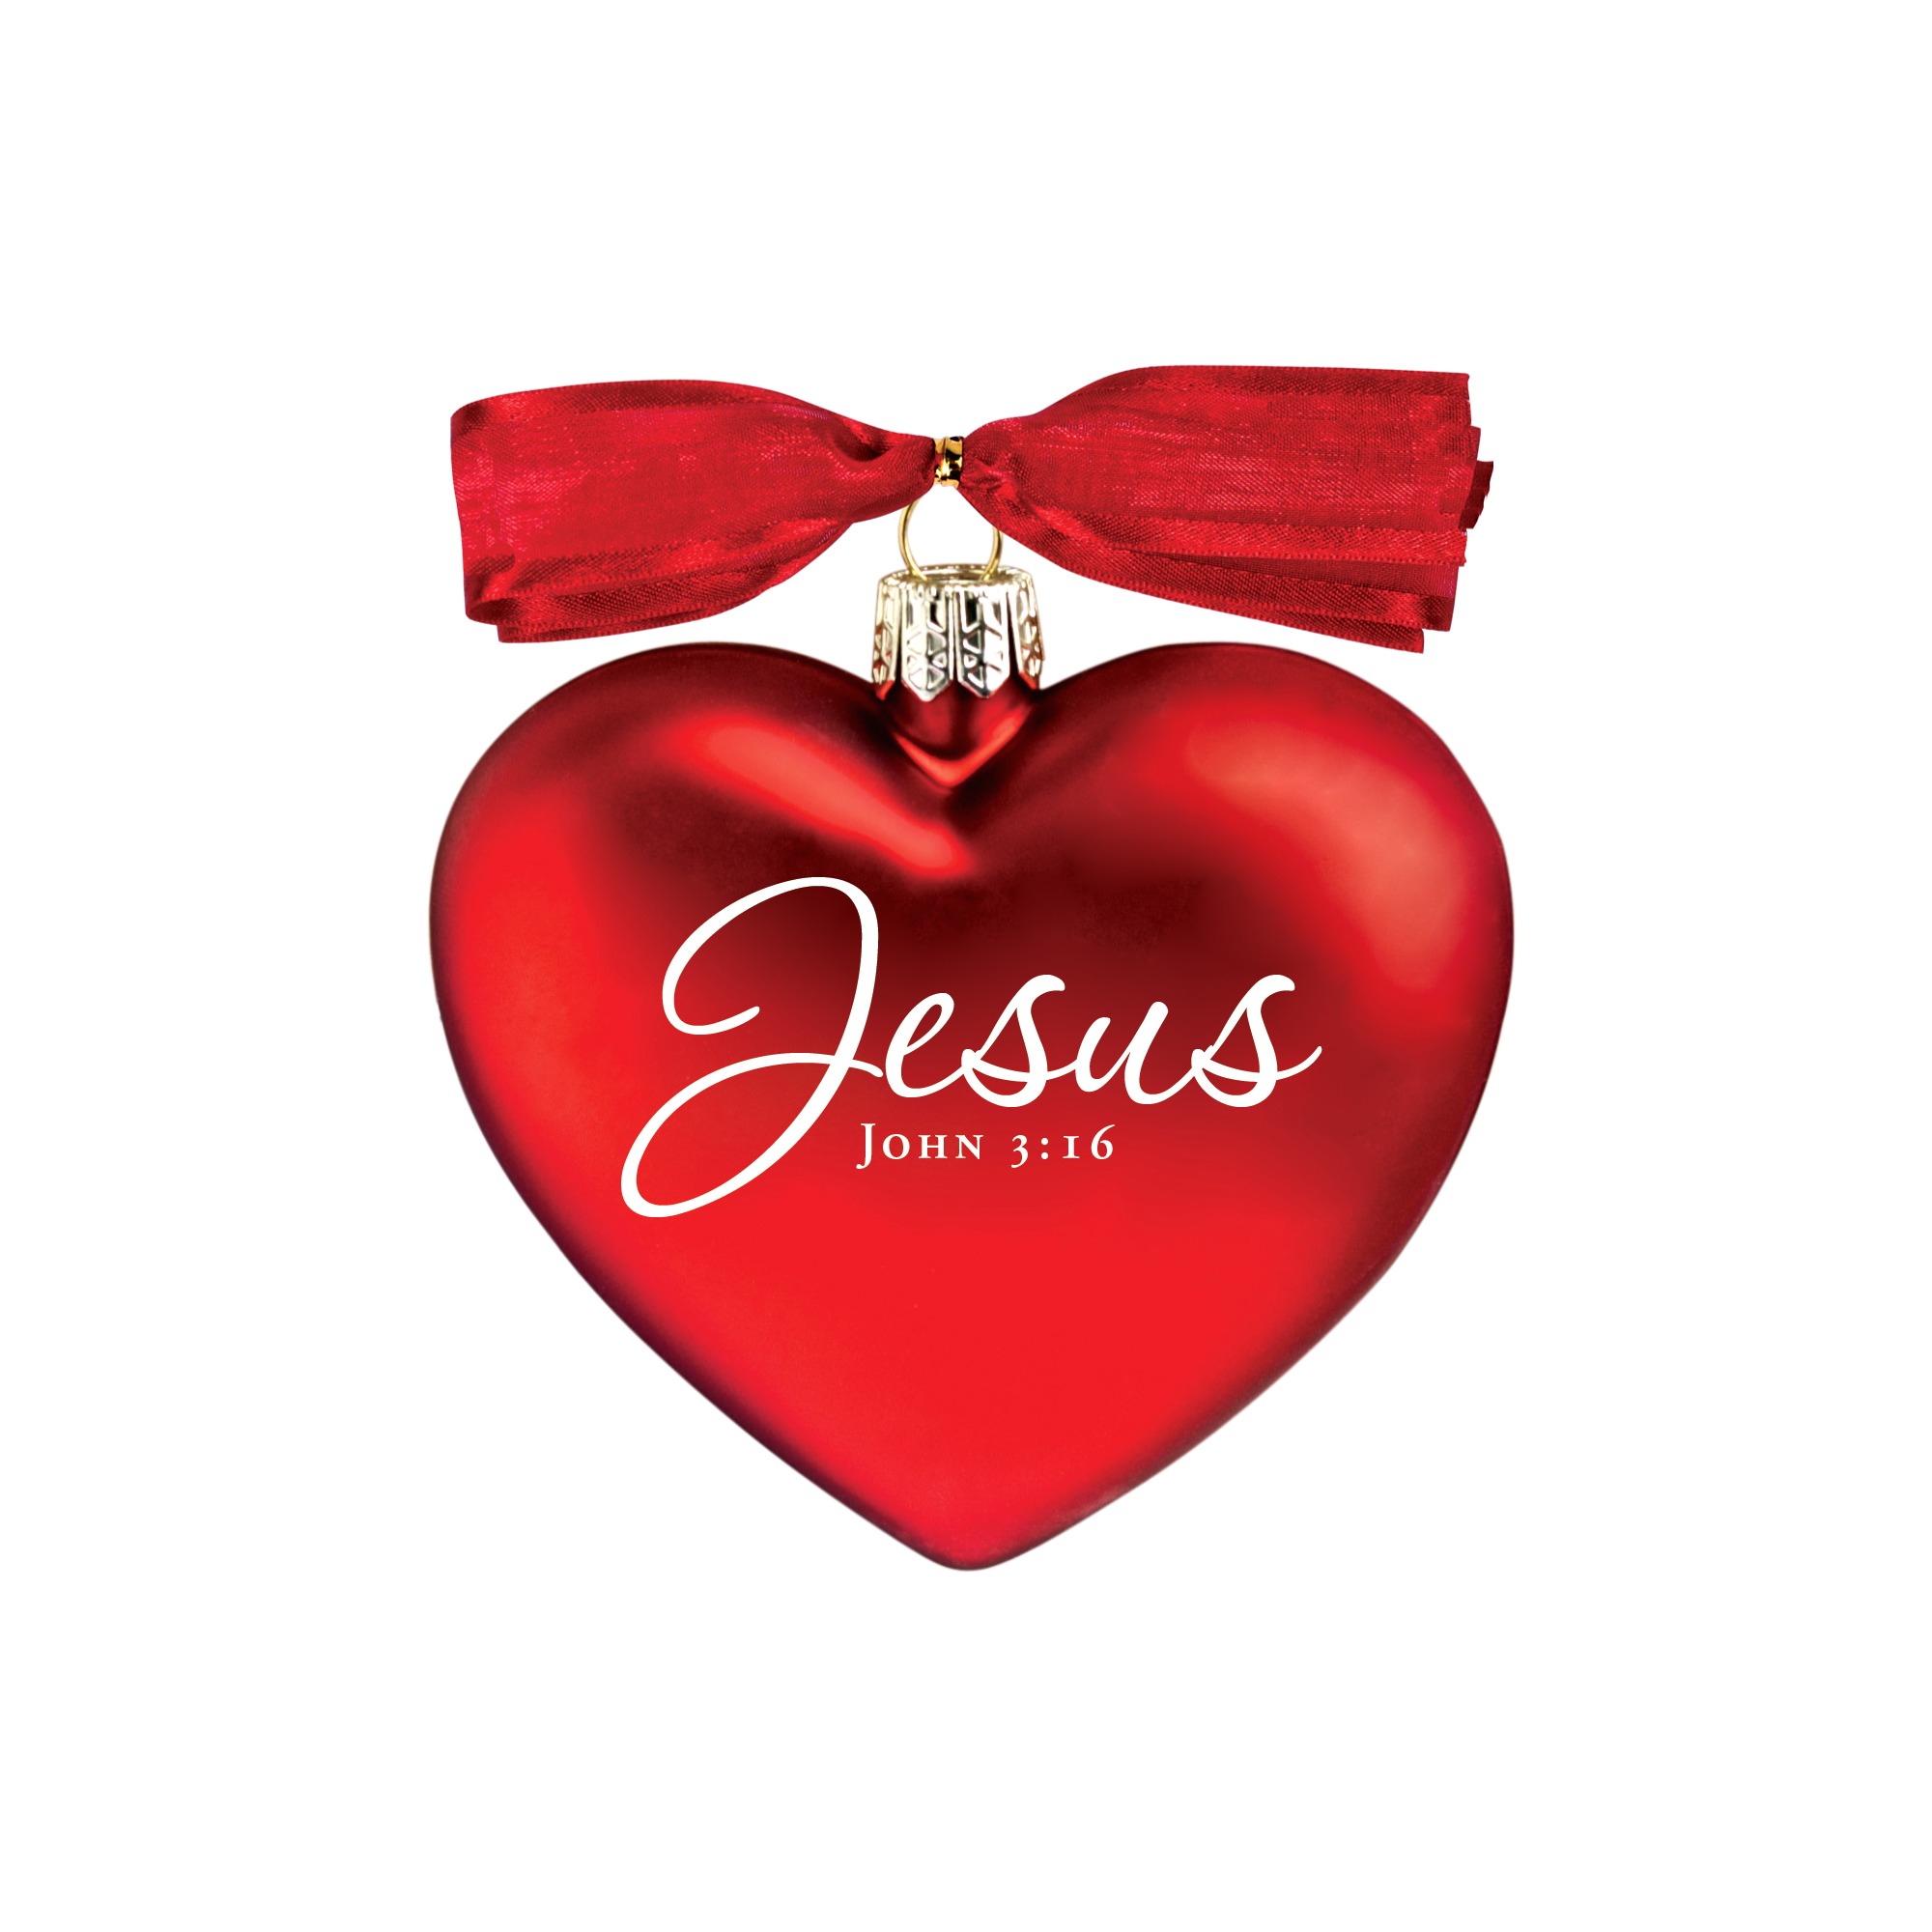 Jesus Heart of Christmas Ornament | The Catholic Company